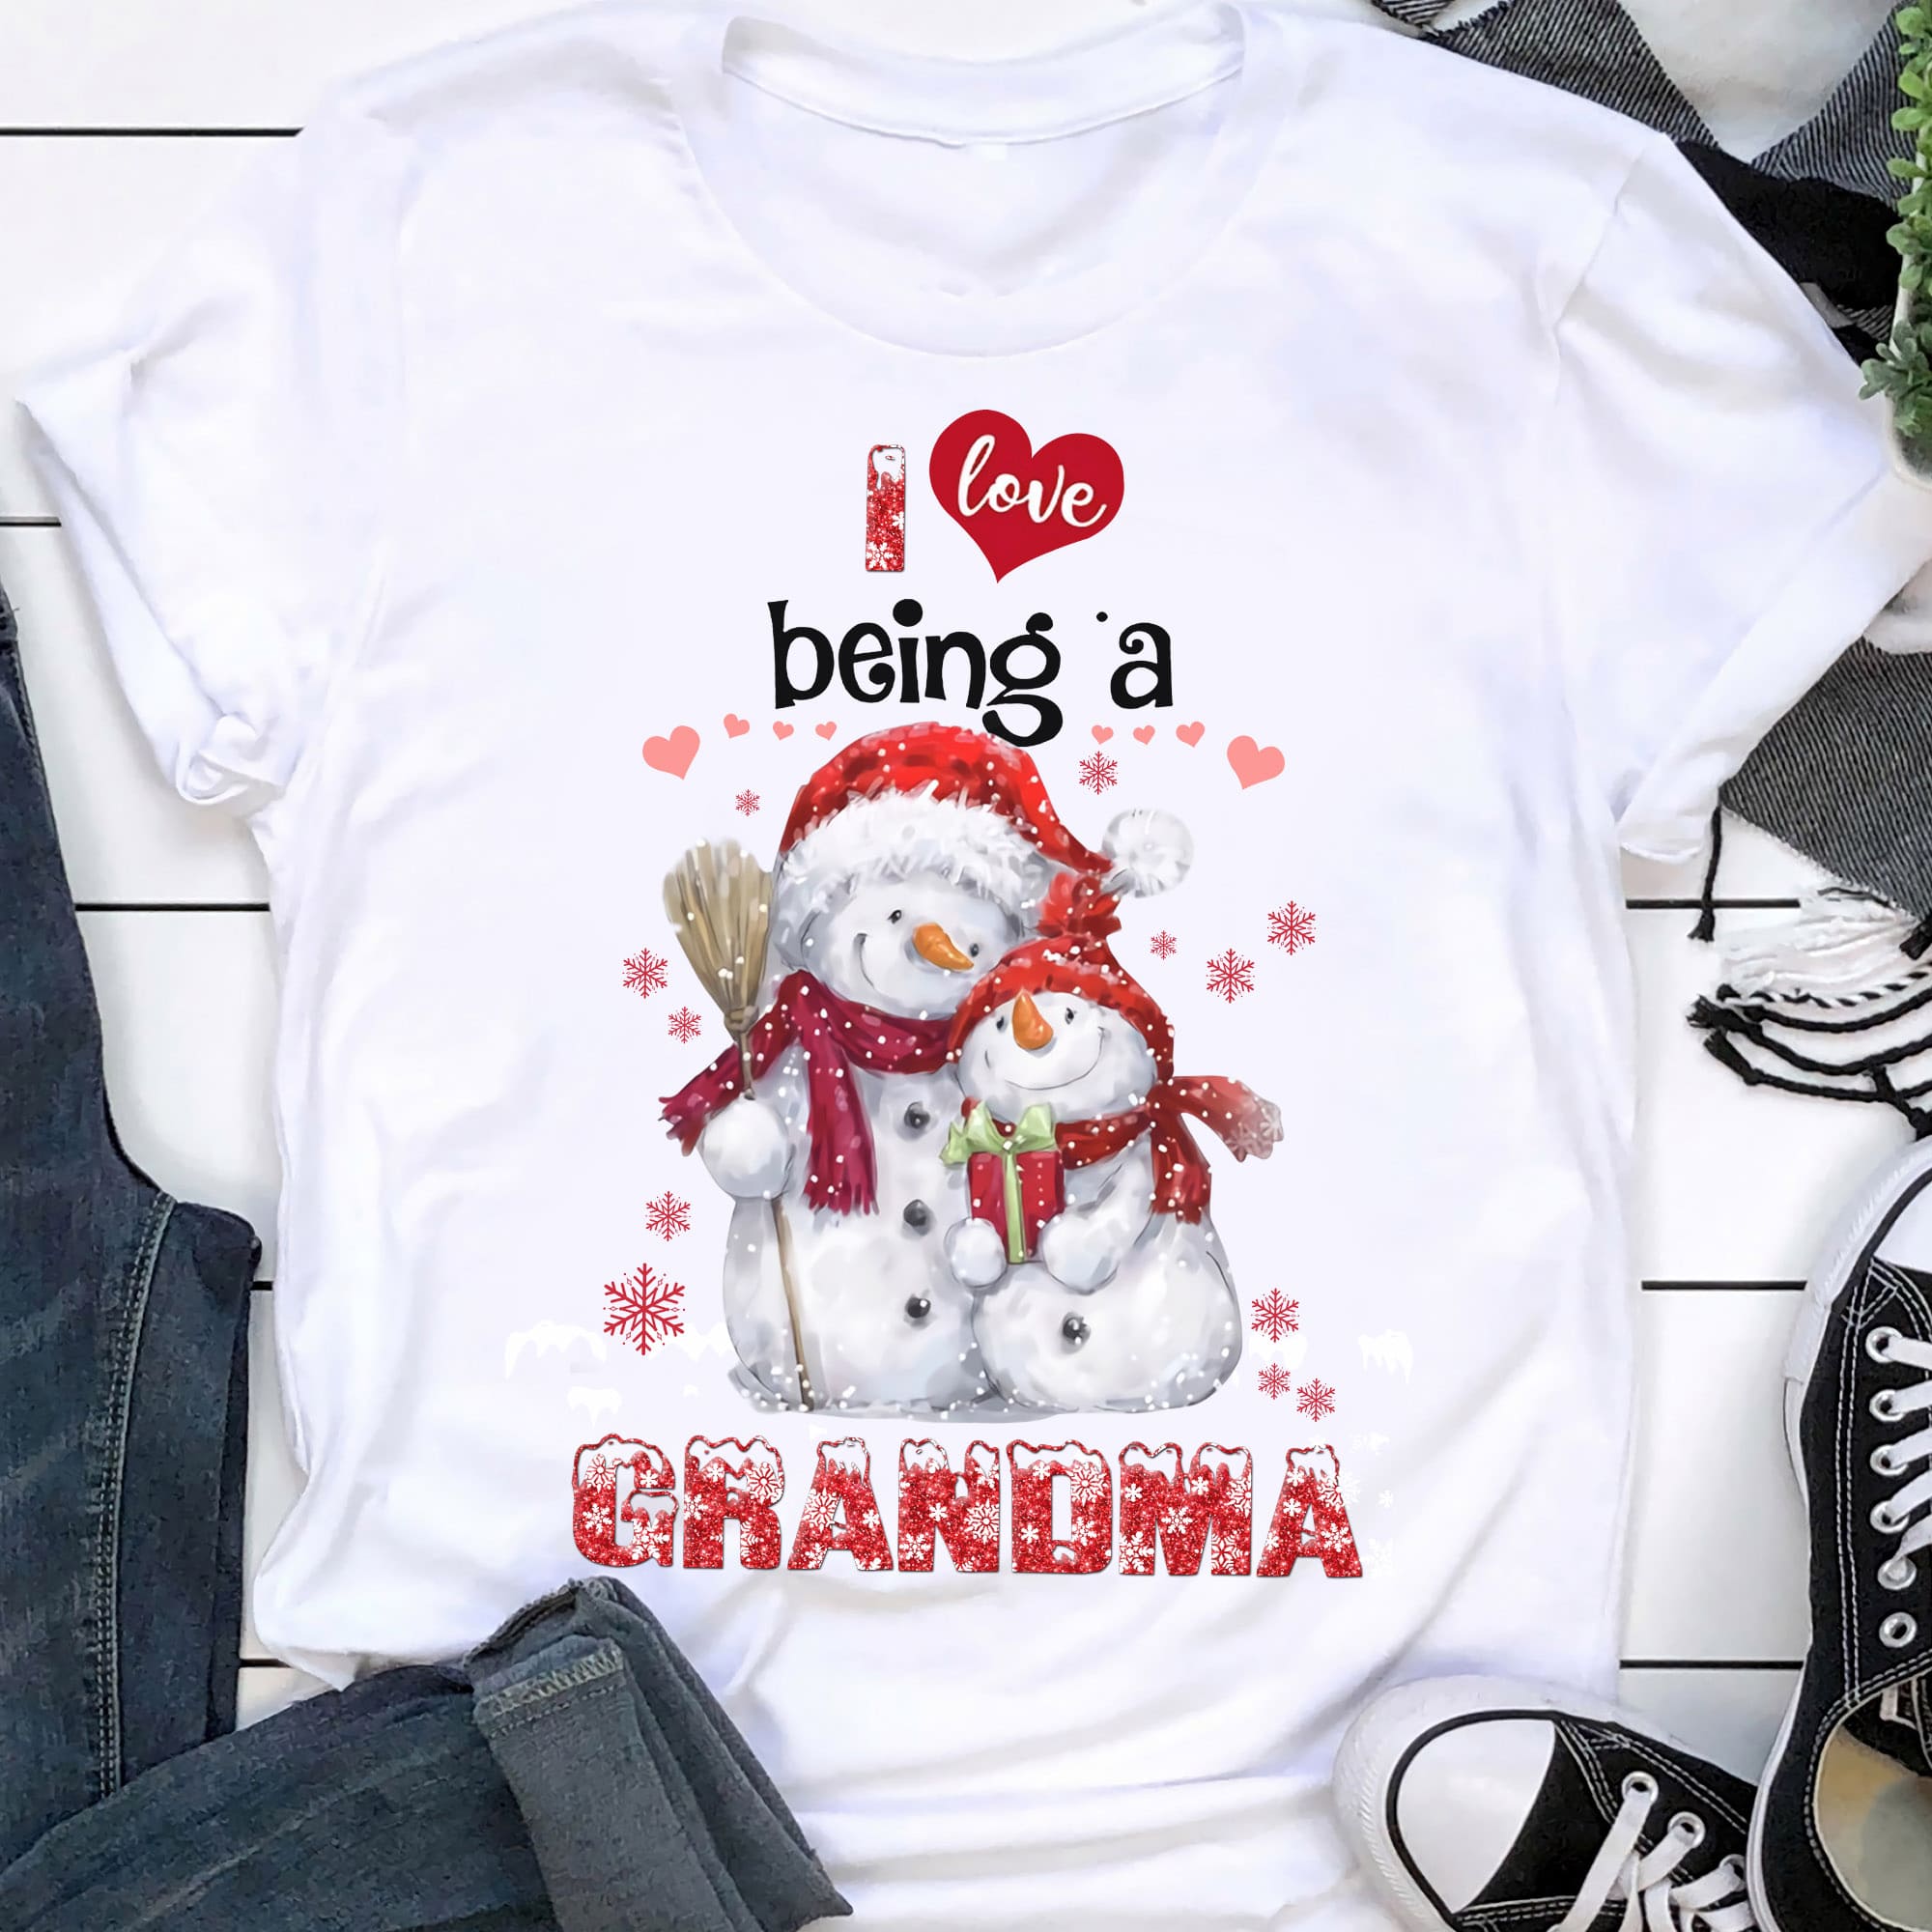 I love being a grandma - Christmas gift for grandma, snowman family